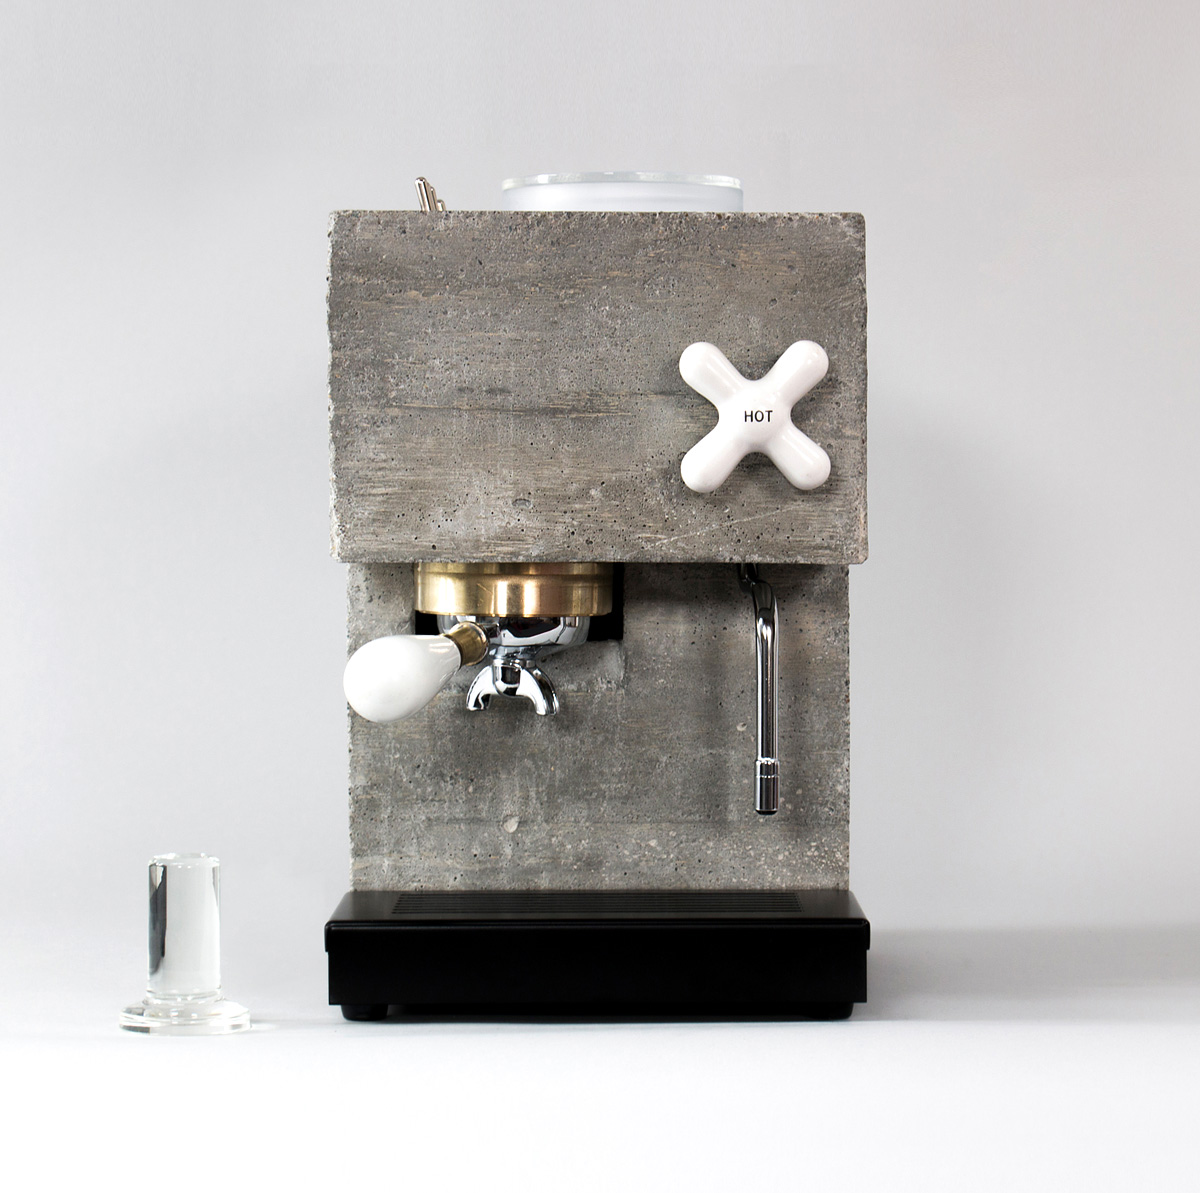 Stunning Concrete Espresso Machine AnZa